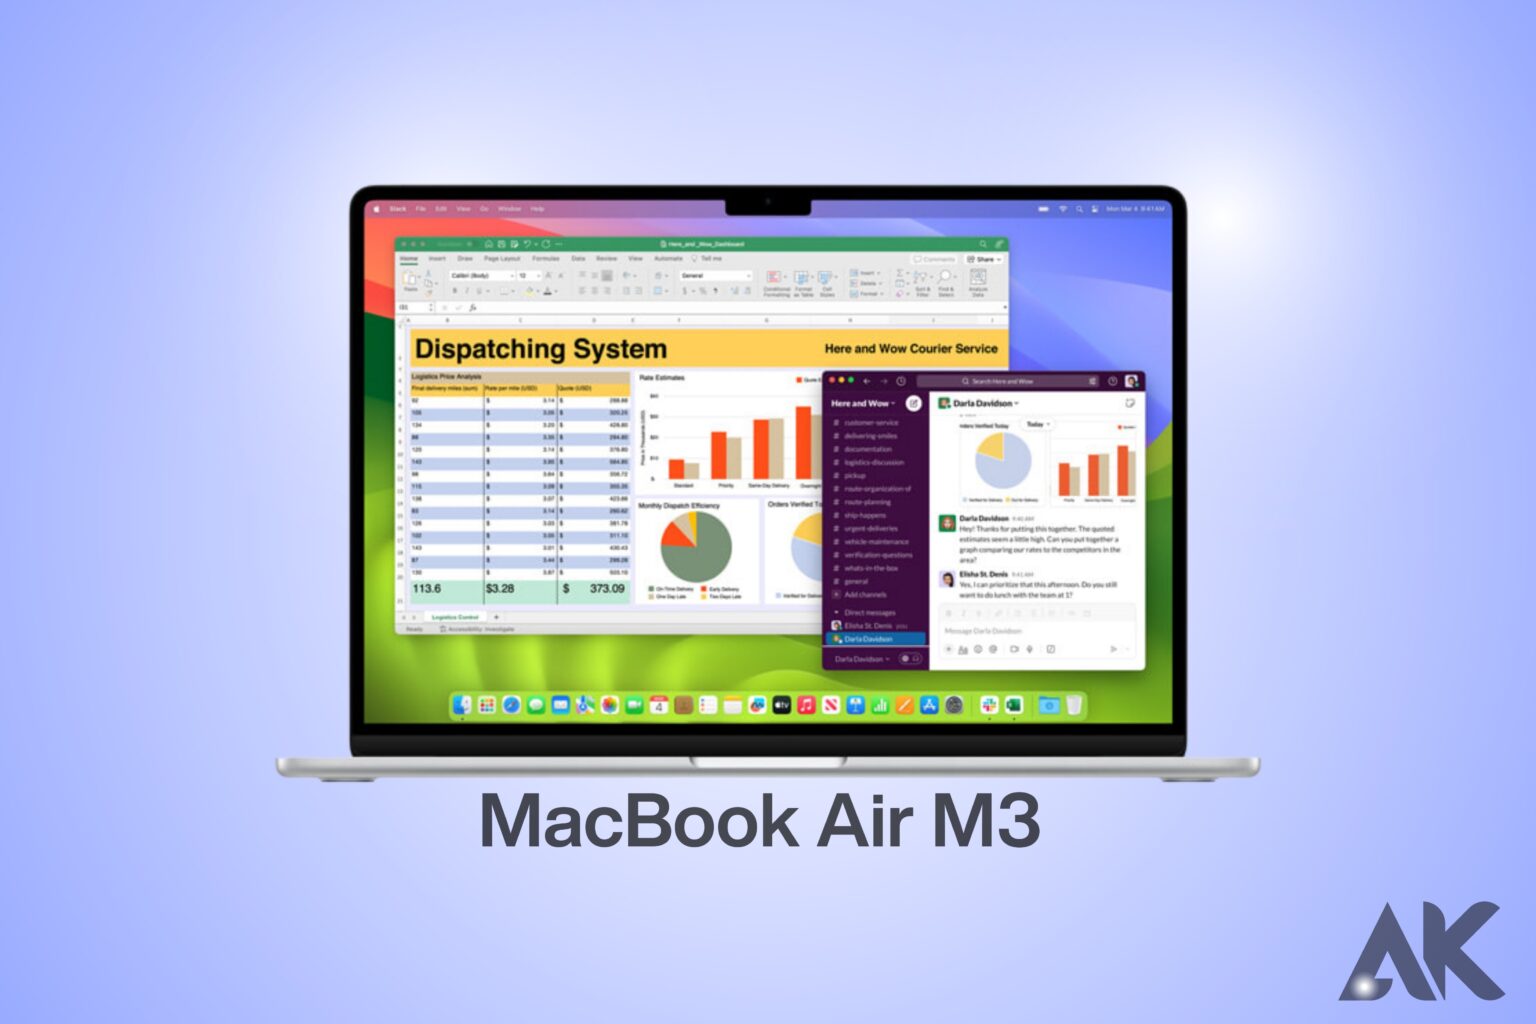 Macbook Air M3 13-inch Performance - Benchmark Breakdown